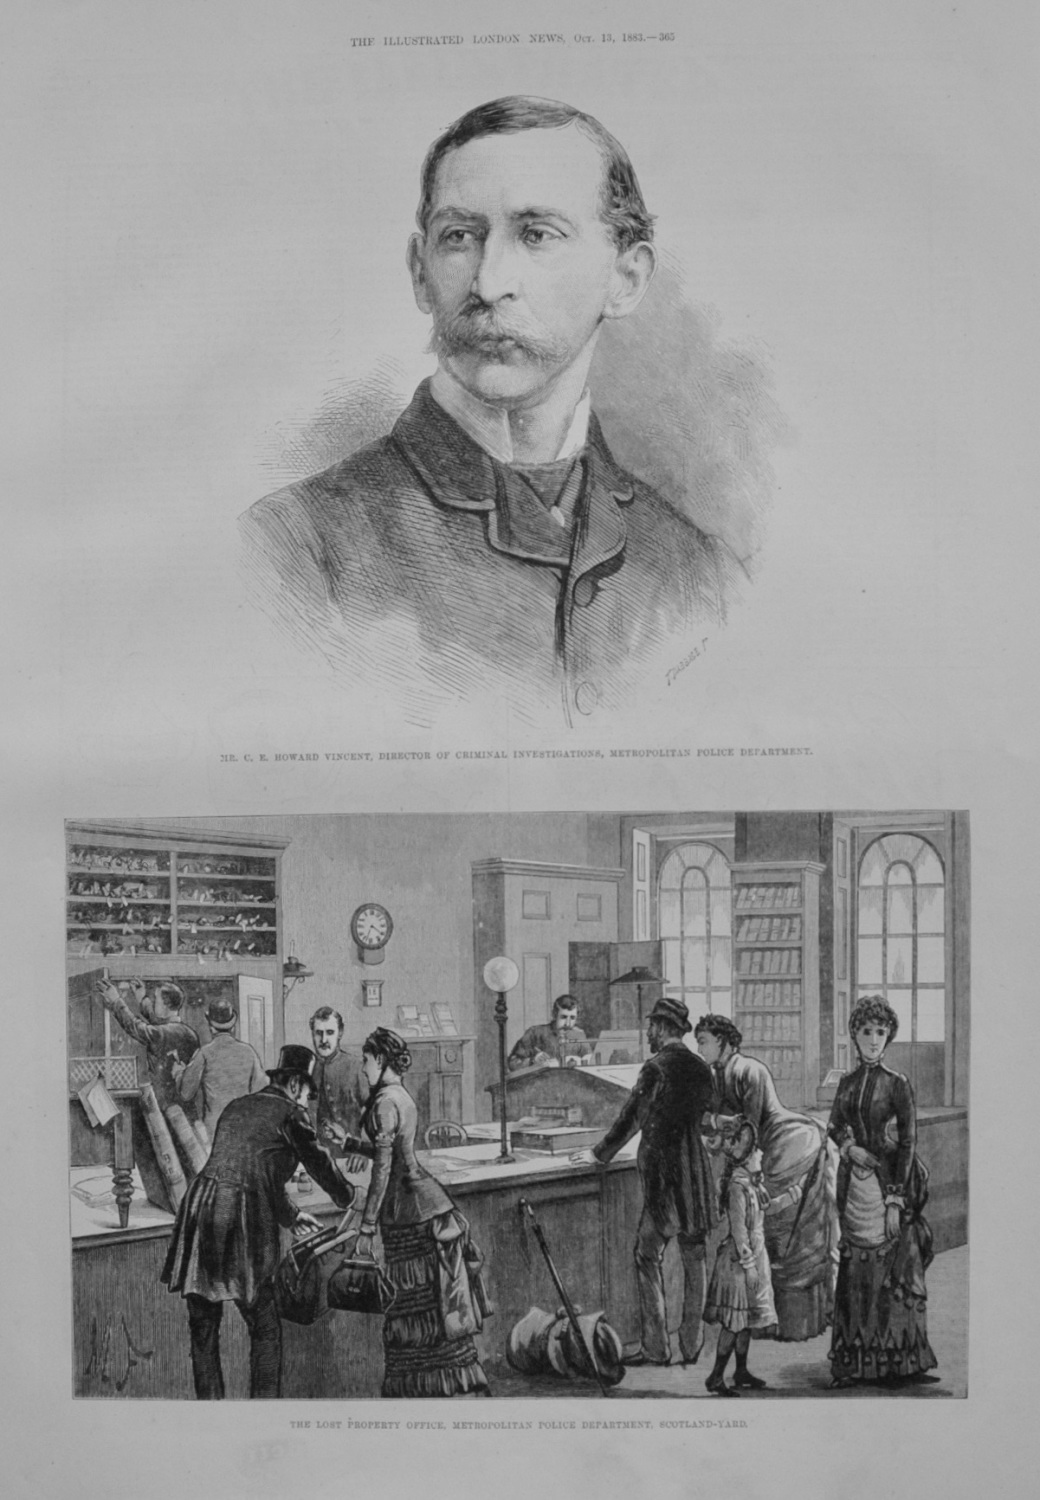 Mr C E Howard Vincent - 1883